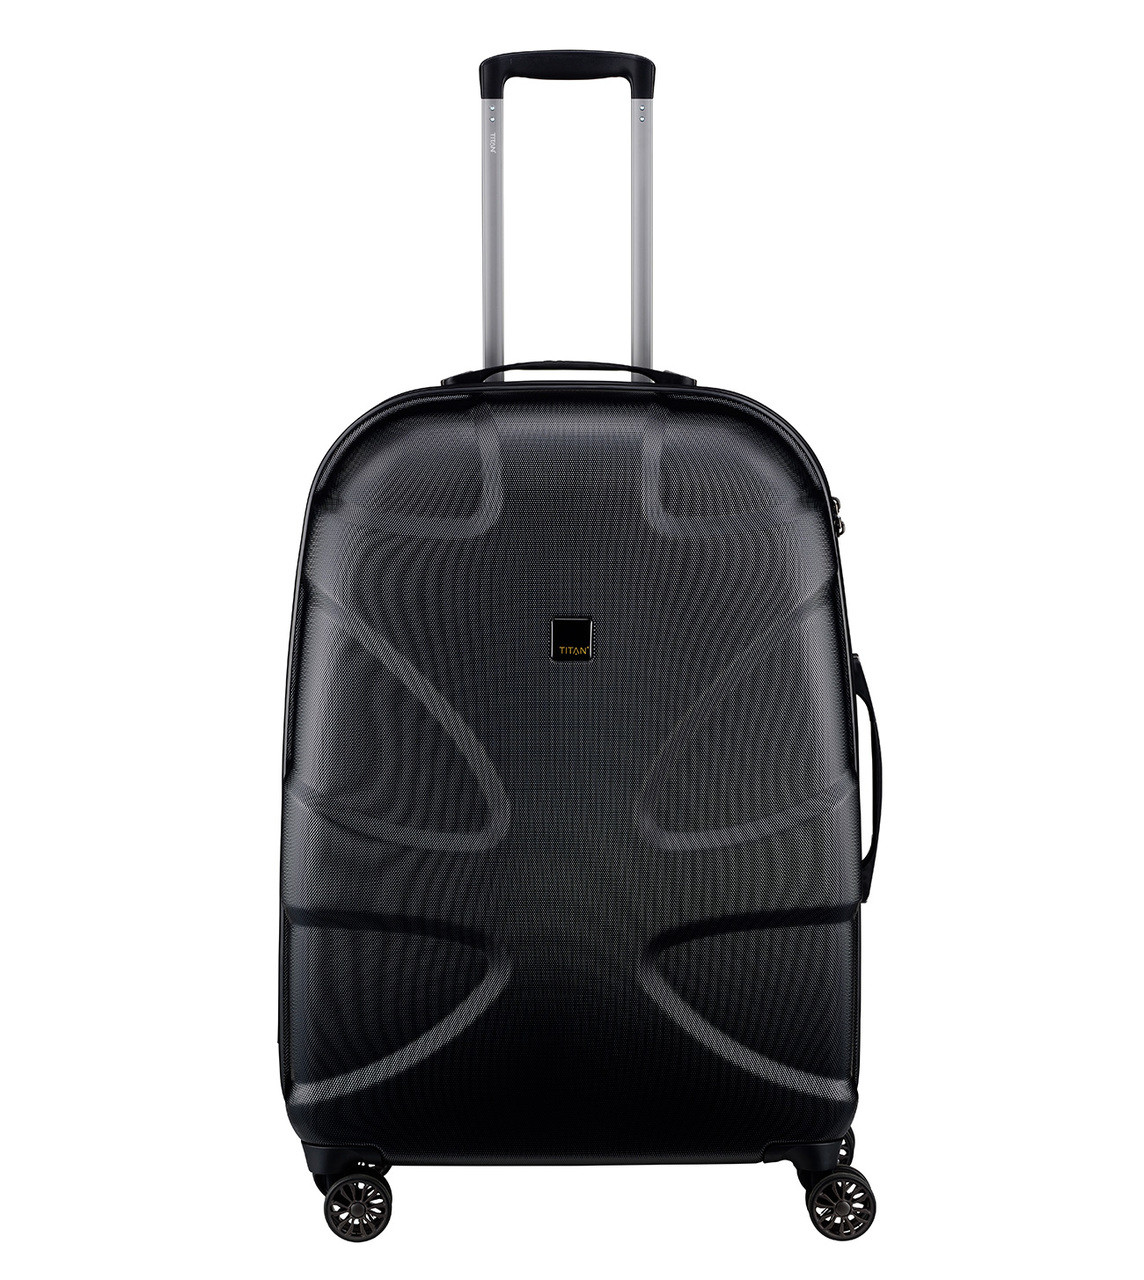 qqqwjf.titan luggage cover , Off 63%,shorin-ryu.net